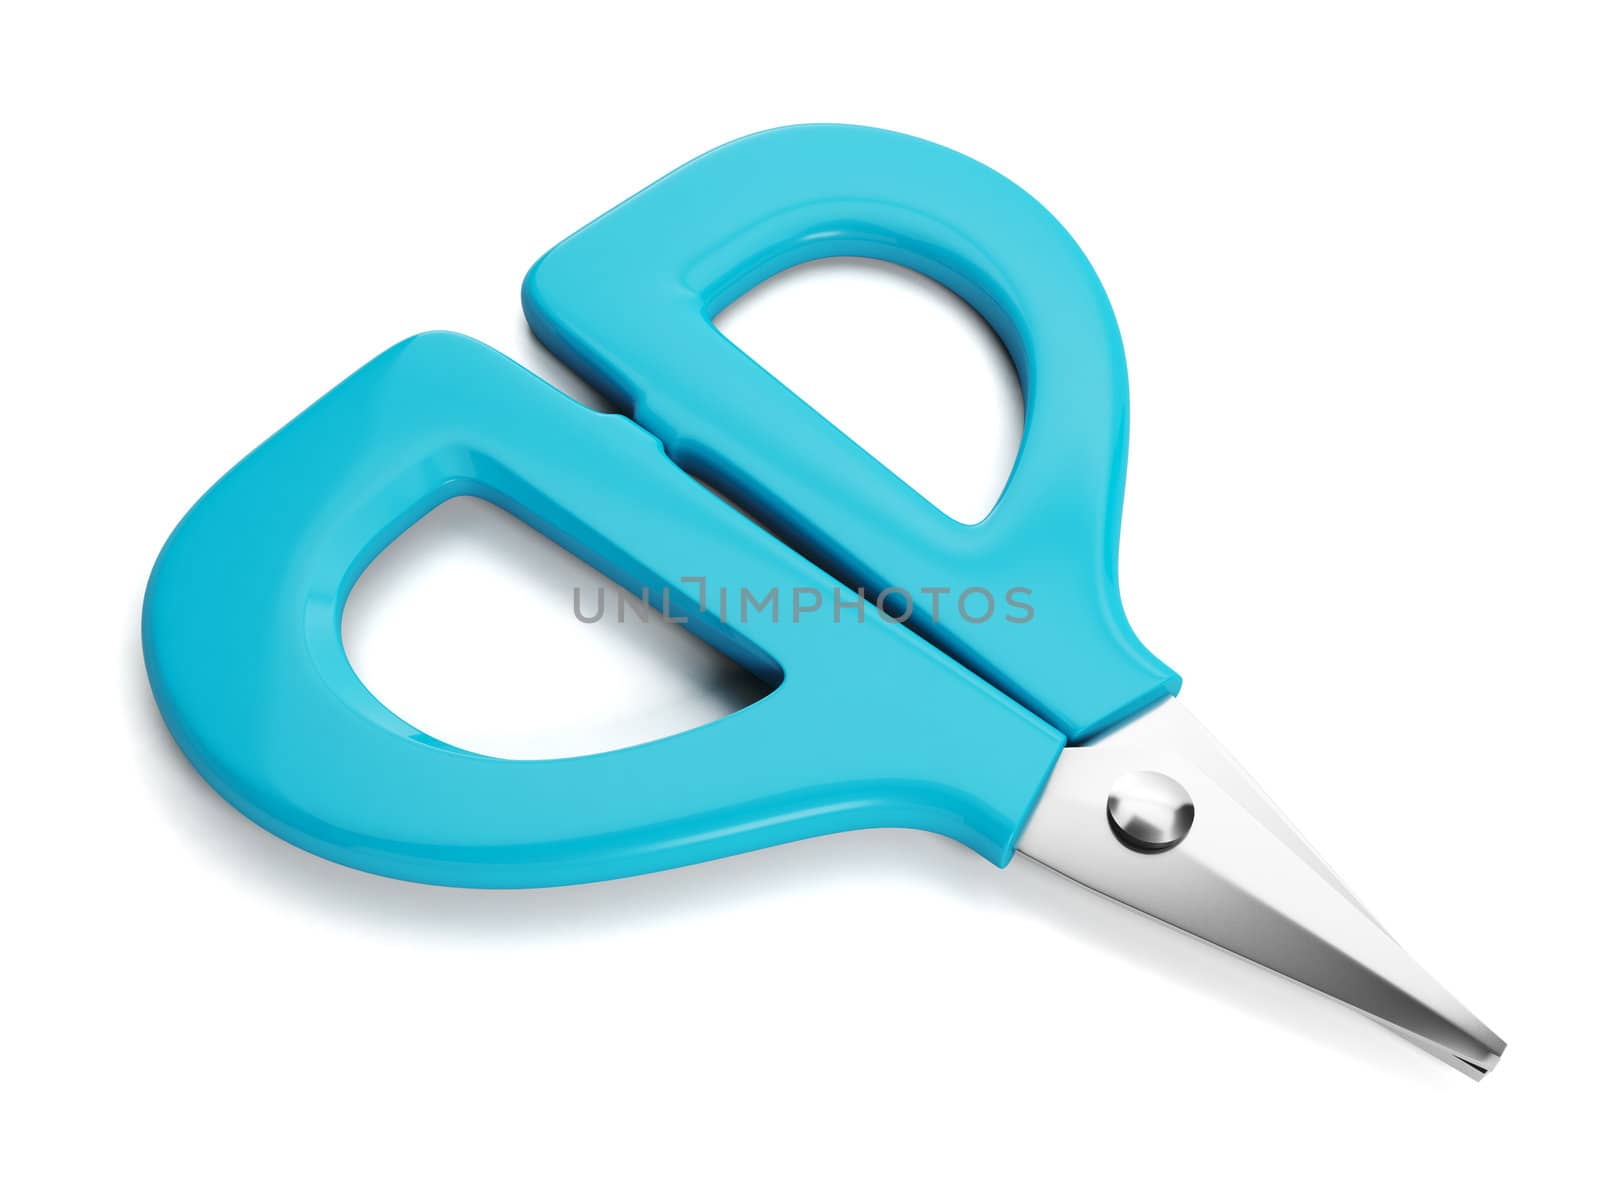 Graphic images of scissors. Lizhat symbol scissors on a white ba by kolobsek